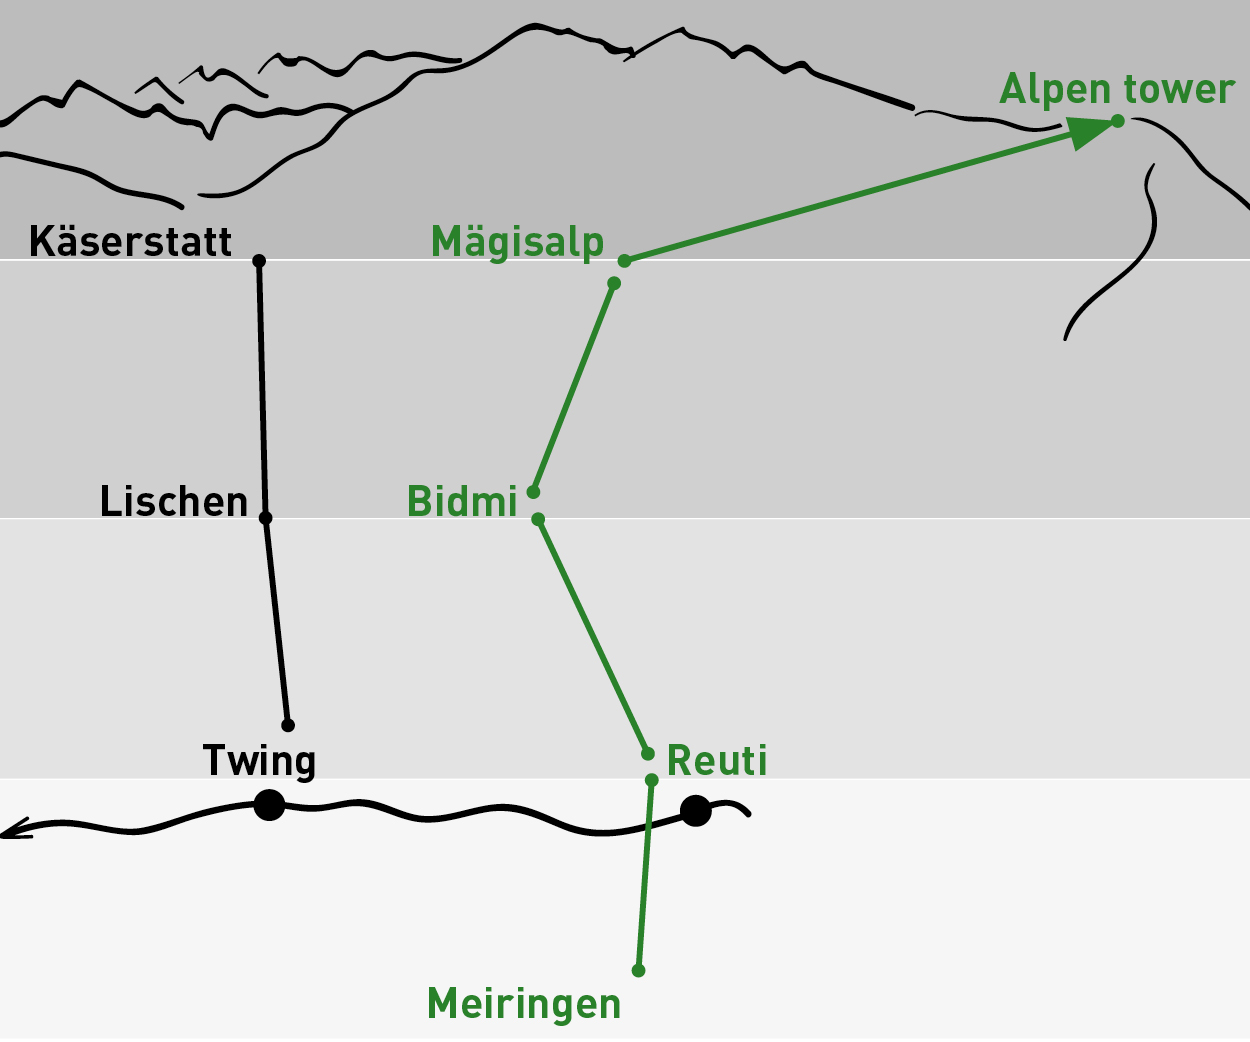 Meiringen – Alpen tower | One-way trip